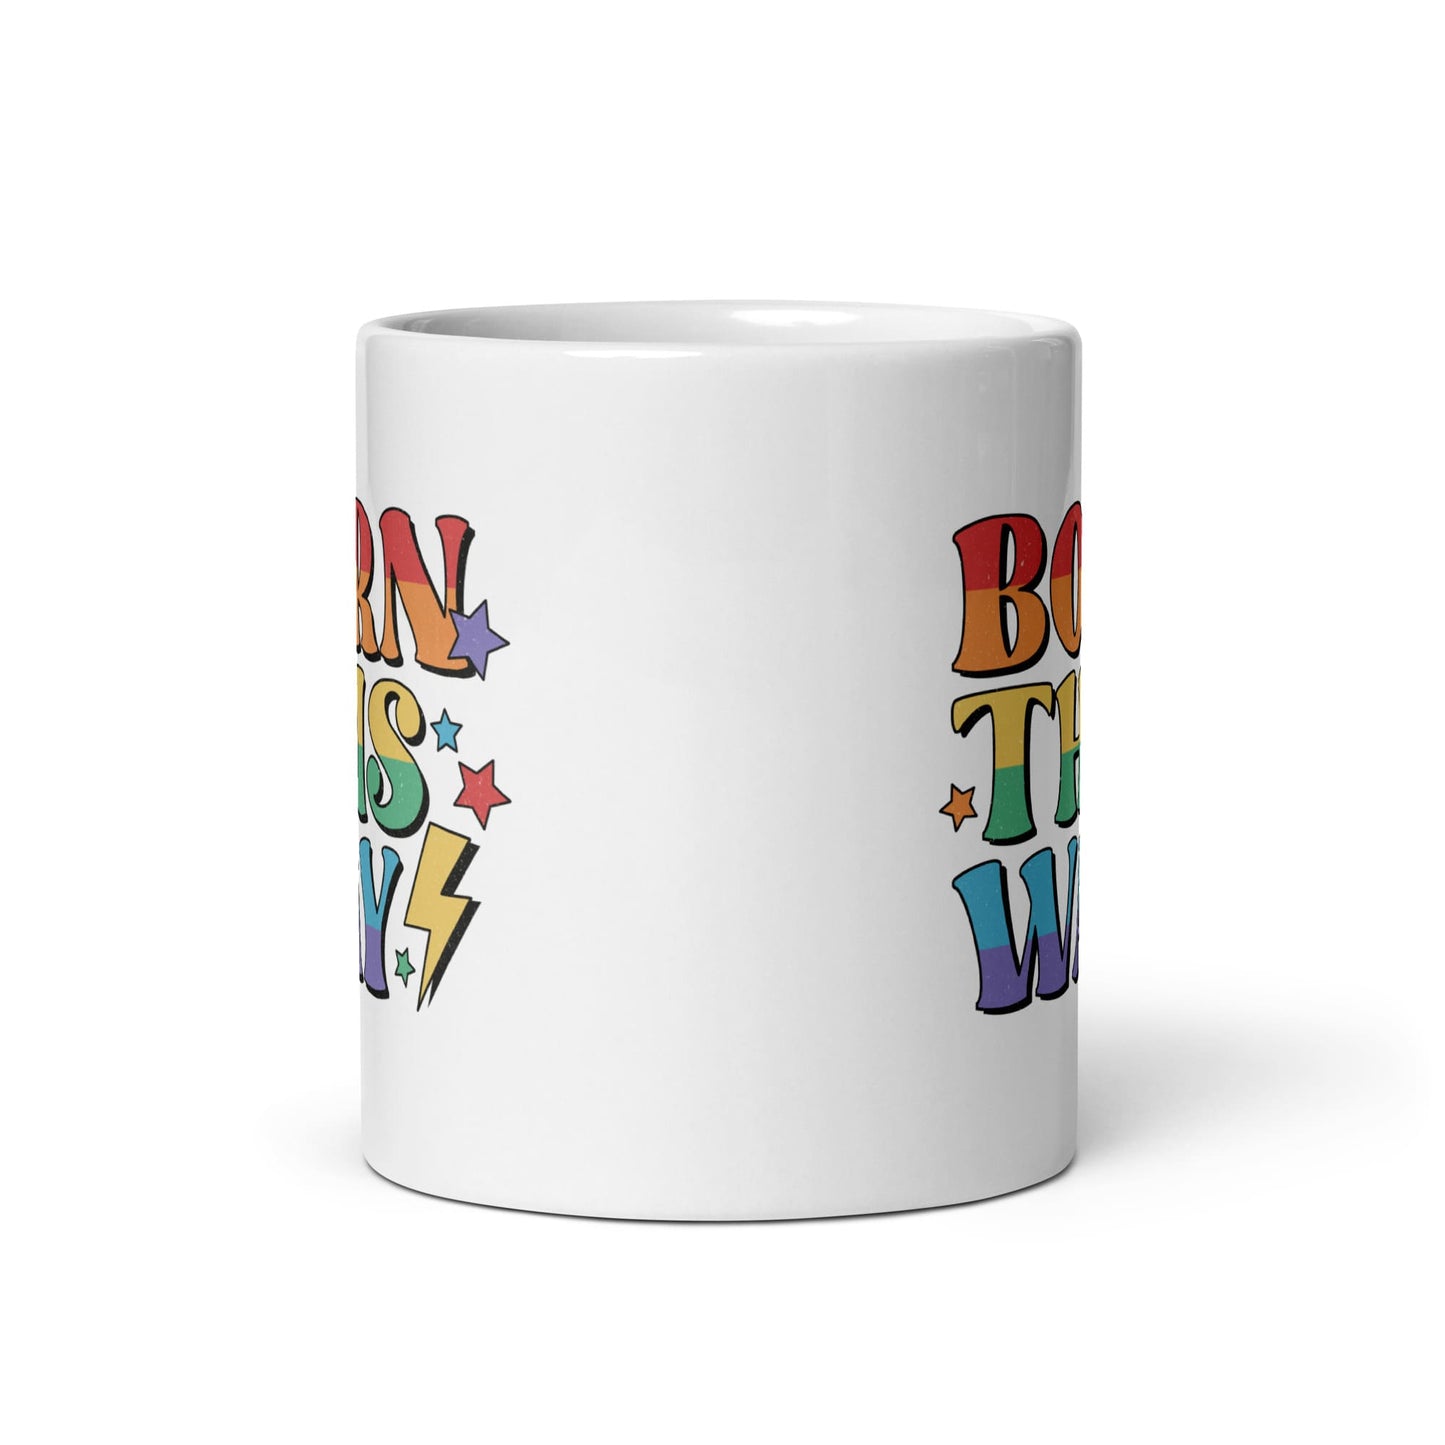 LGBTQ pride mug, born this way coffee or tea cup middle